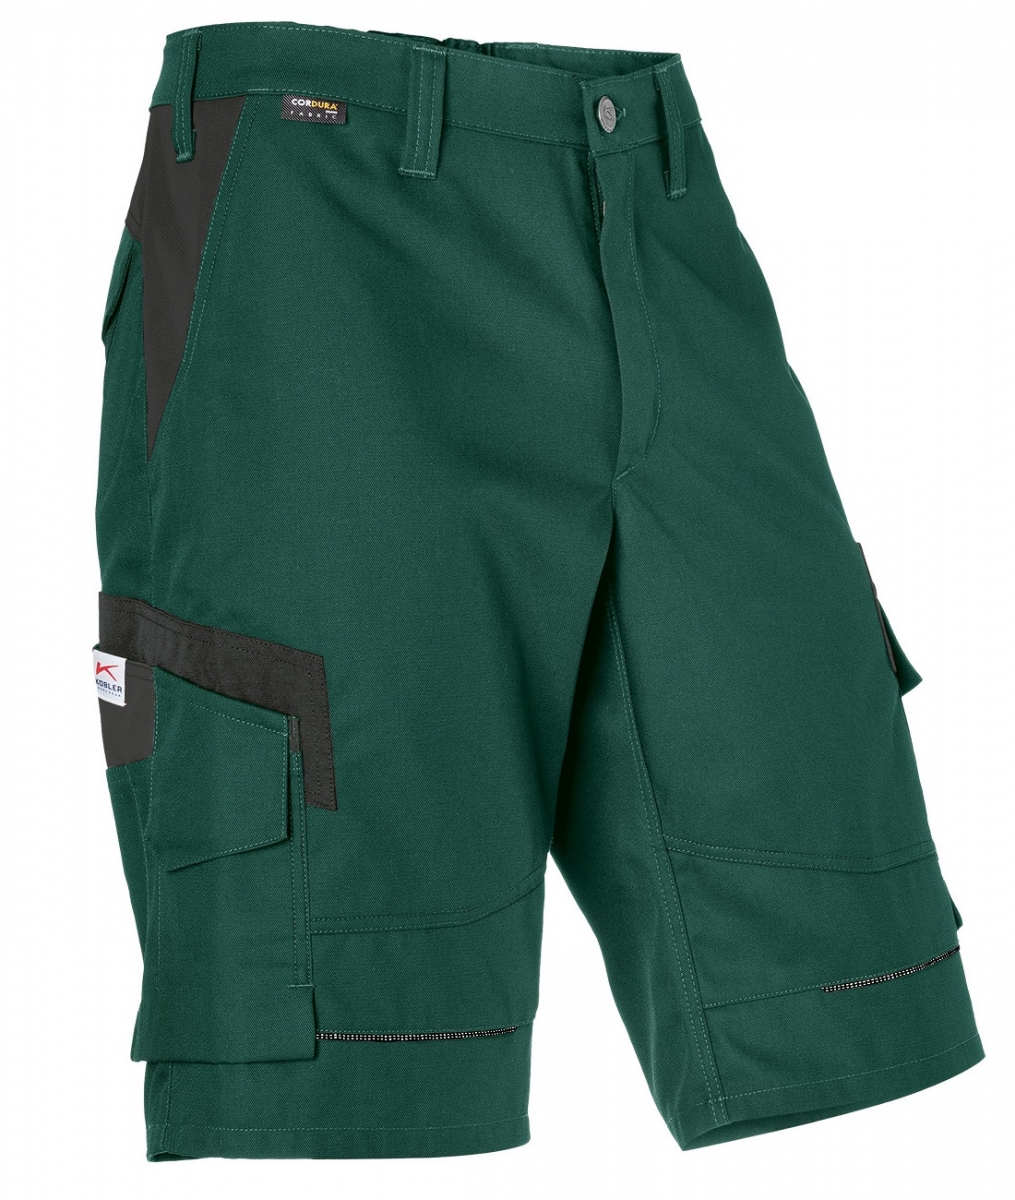 KBLER-Workwear, Shorts, Innovatiq, 295 g/m, moosgrn/schwarz